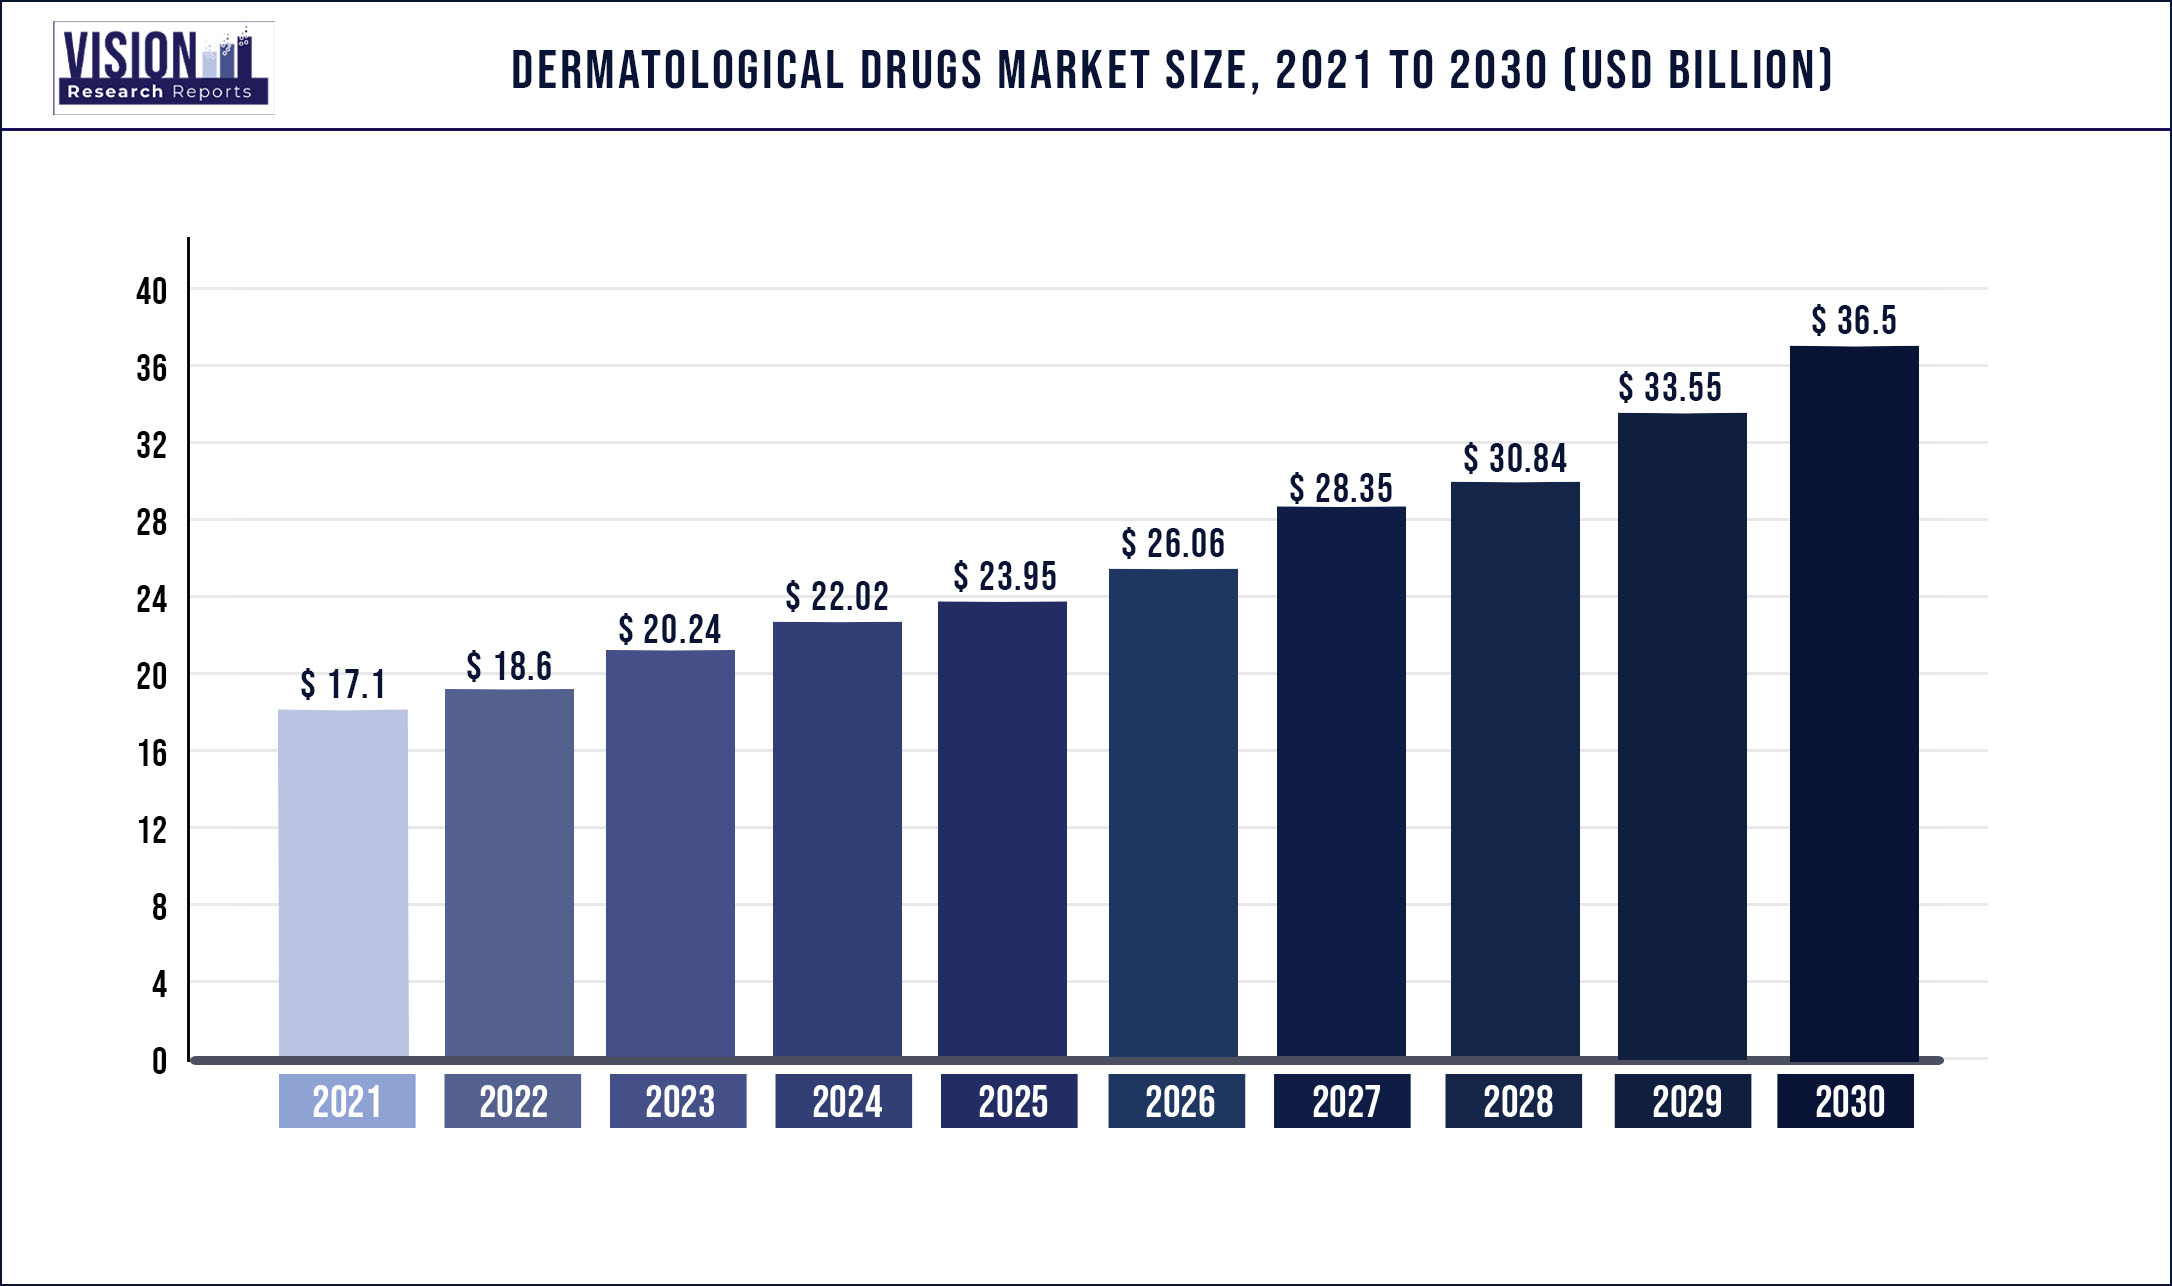 Dermatological Drugs Market Size 2021 to 2030